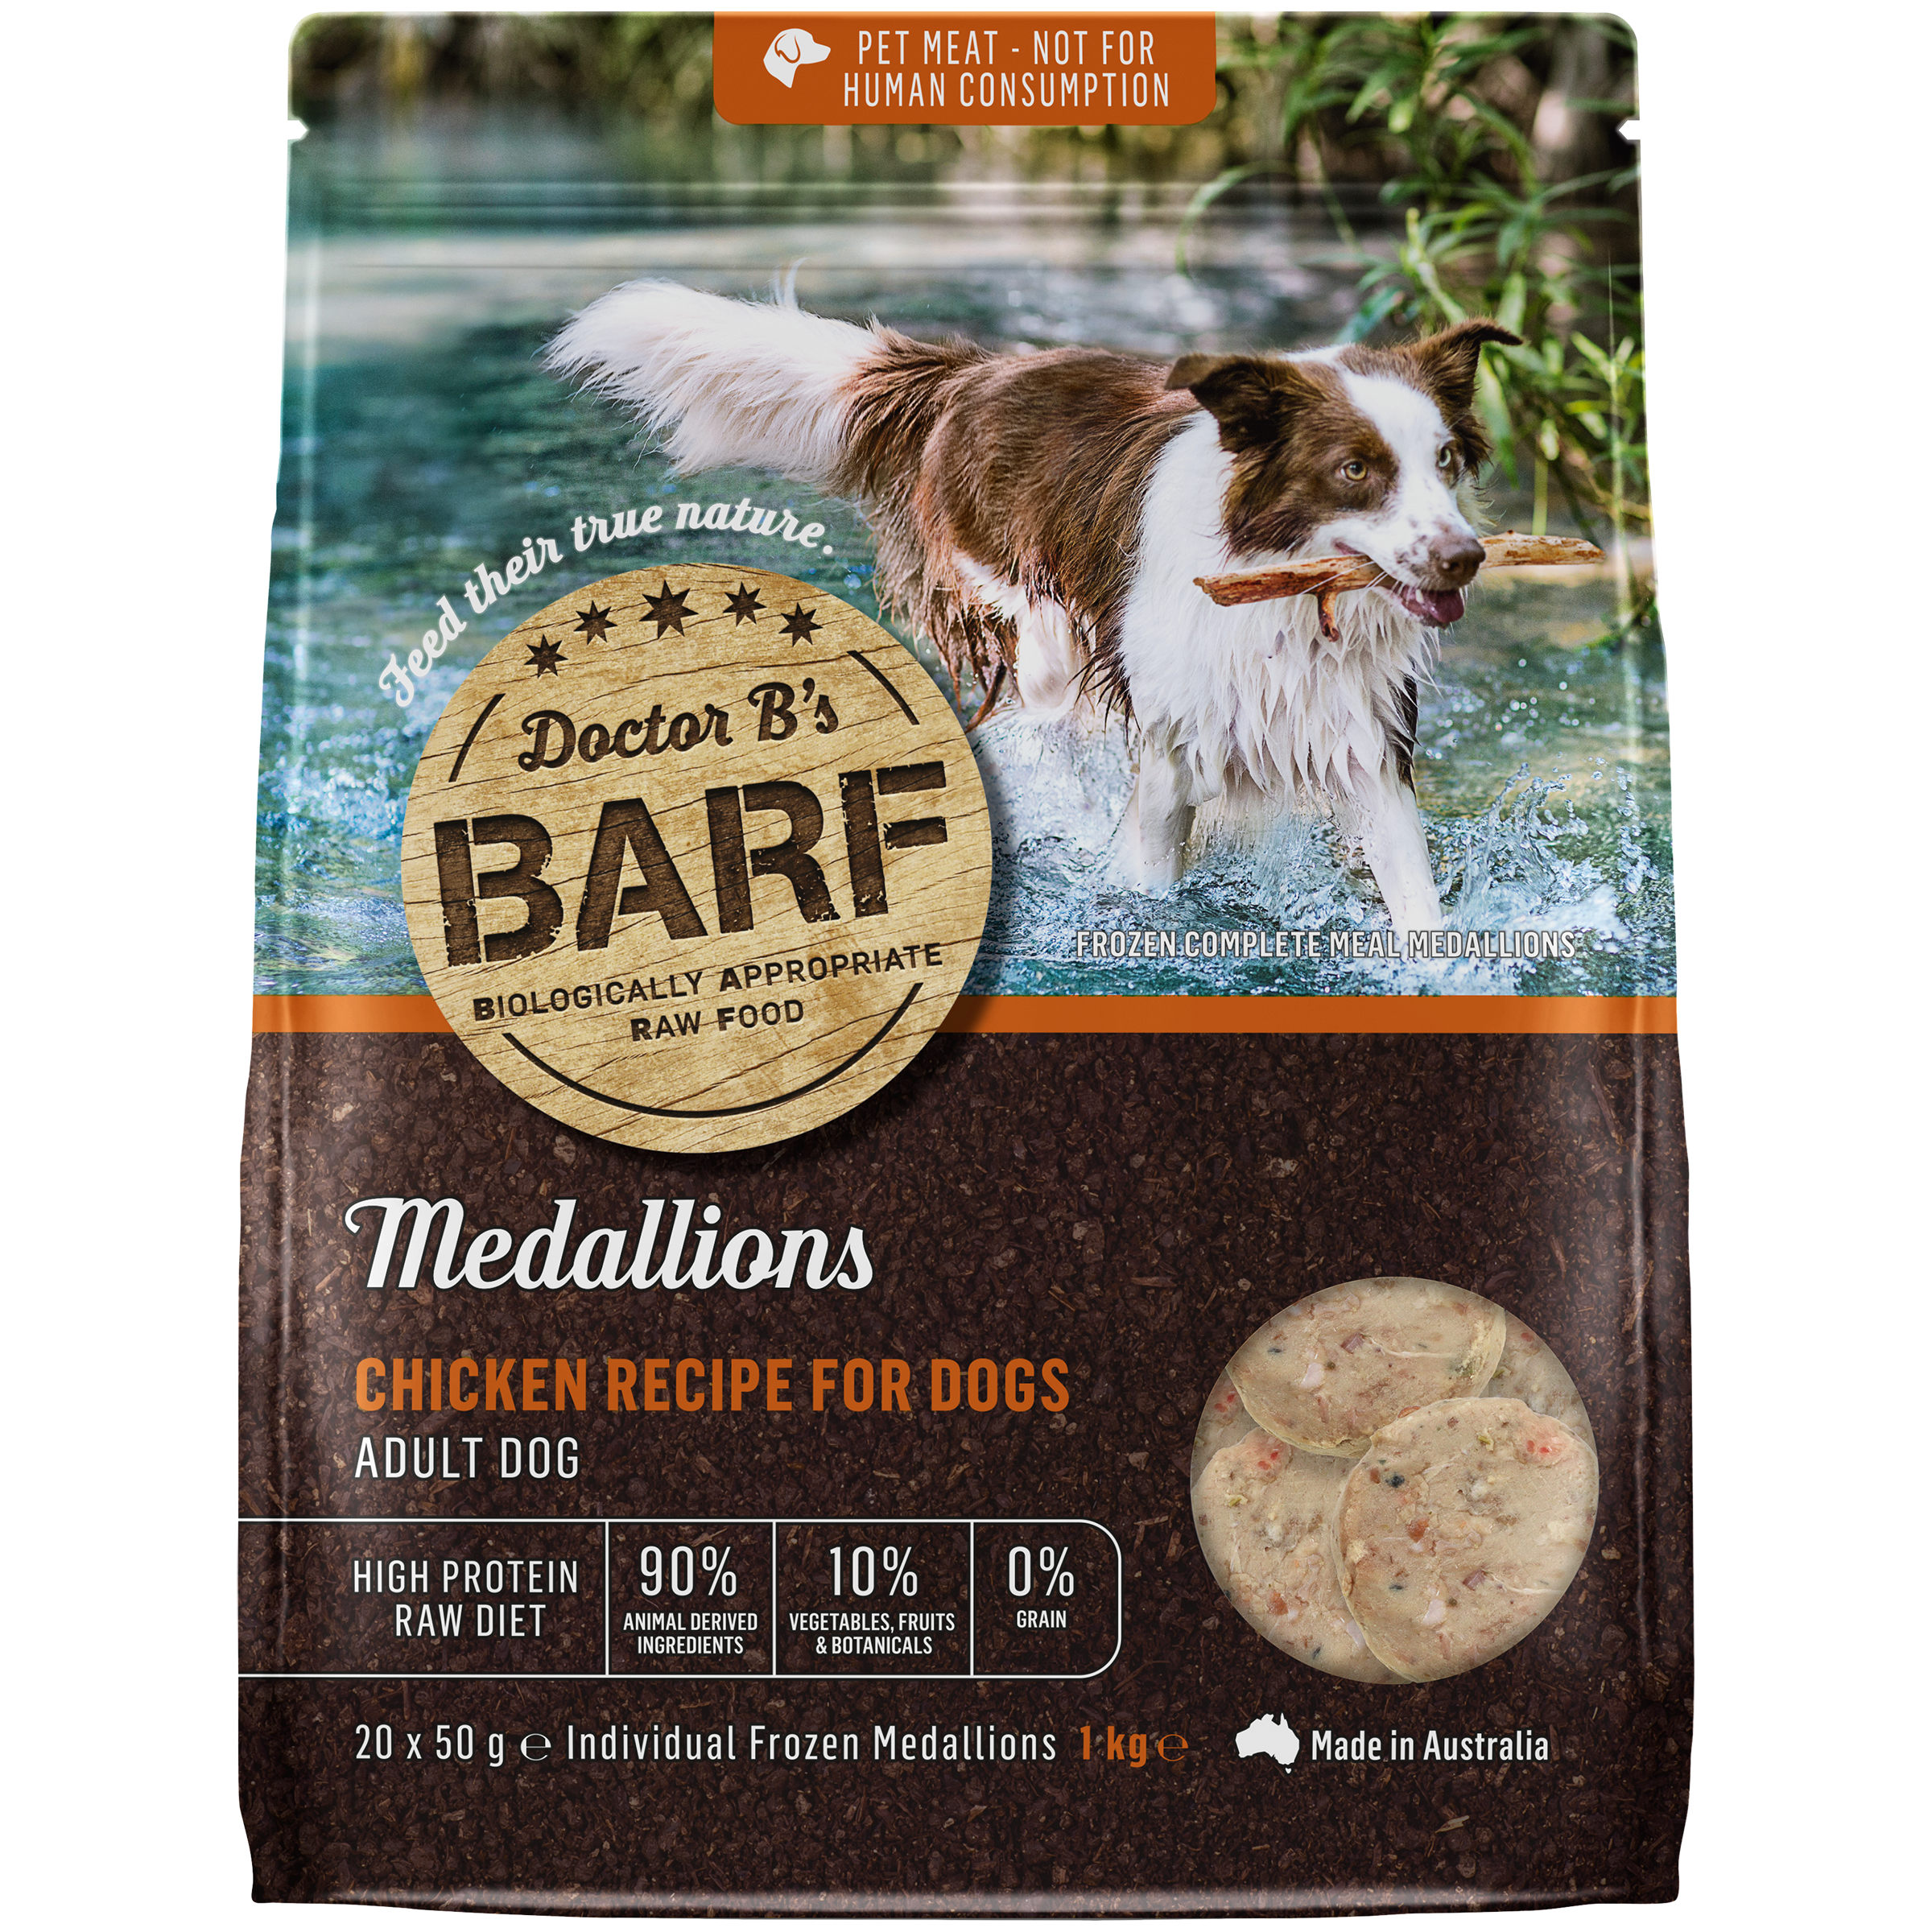 Doctor B's BARF Medallions Chicken Recipe Frozen Adult Dog Food 1kg